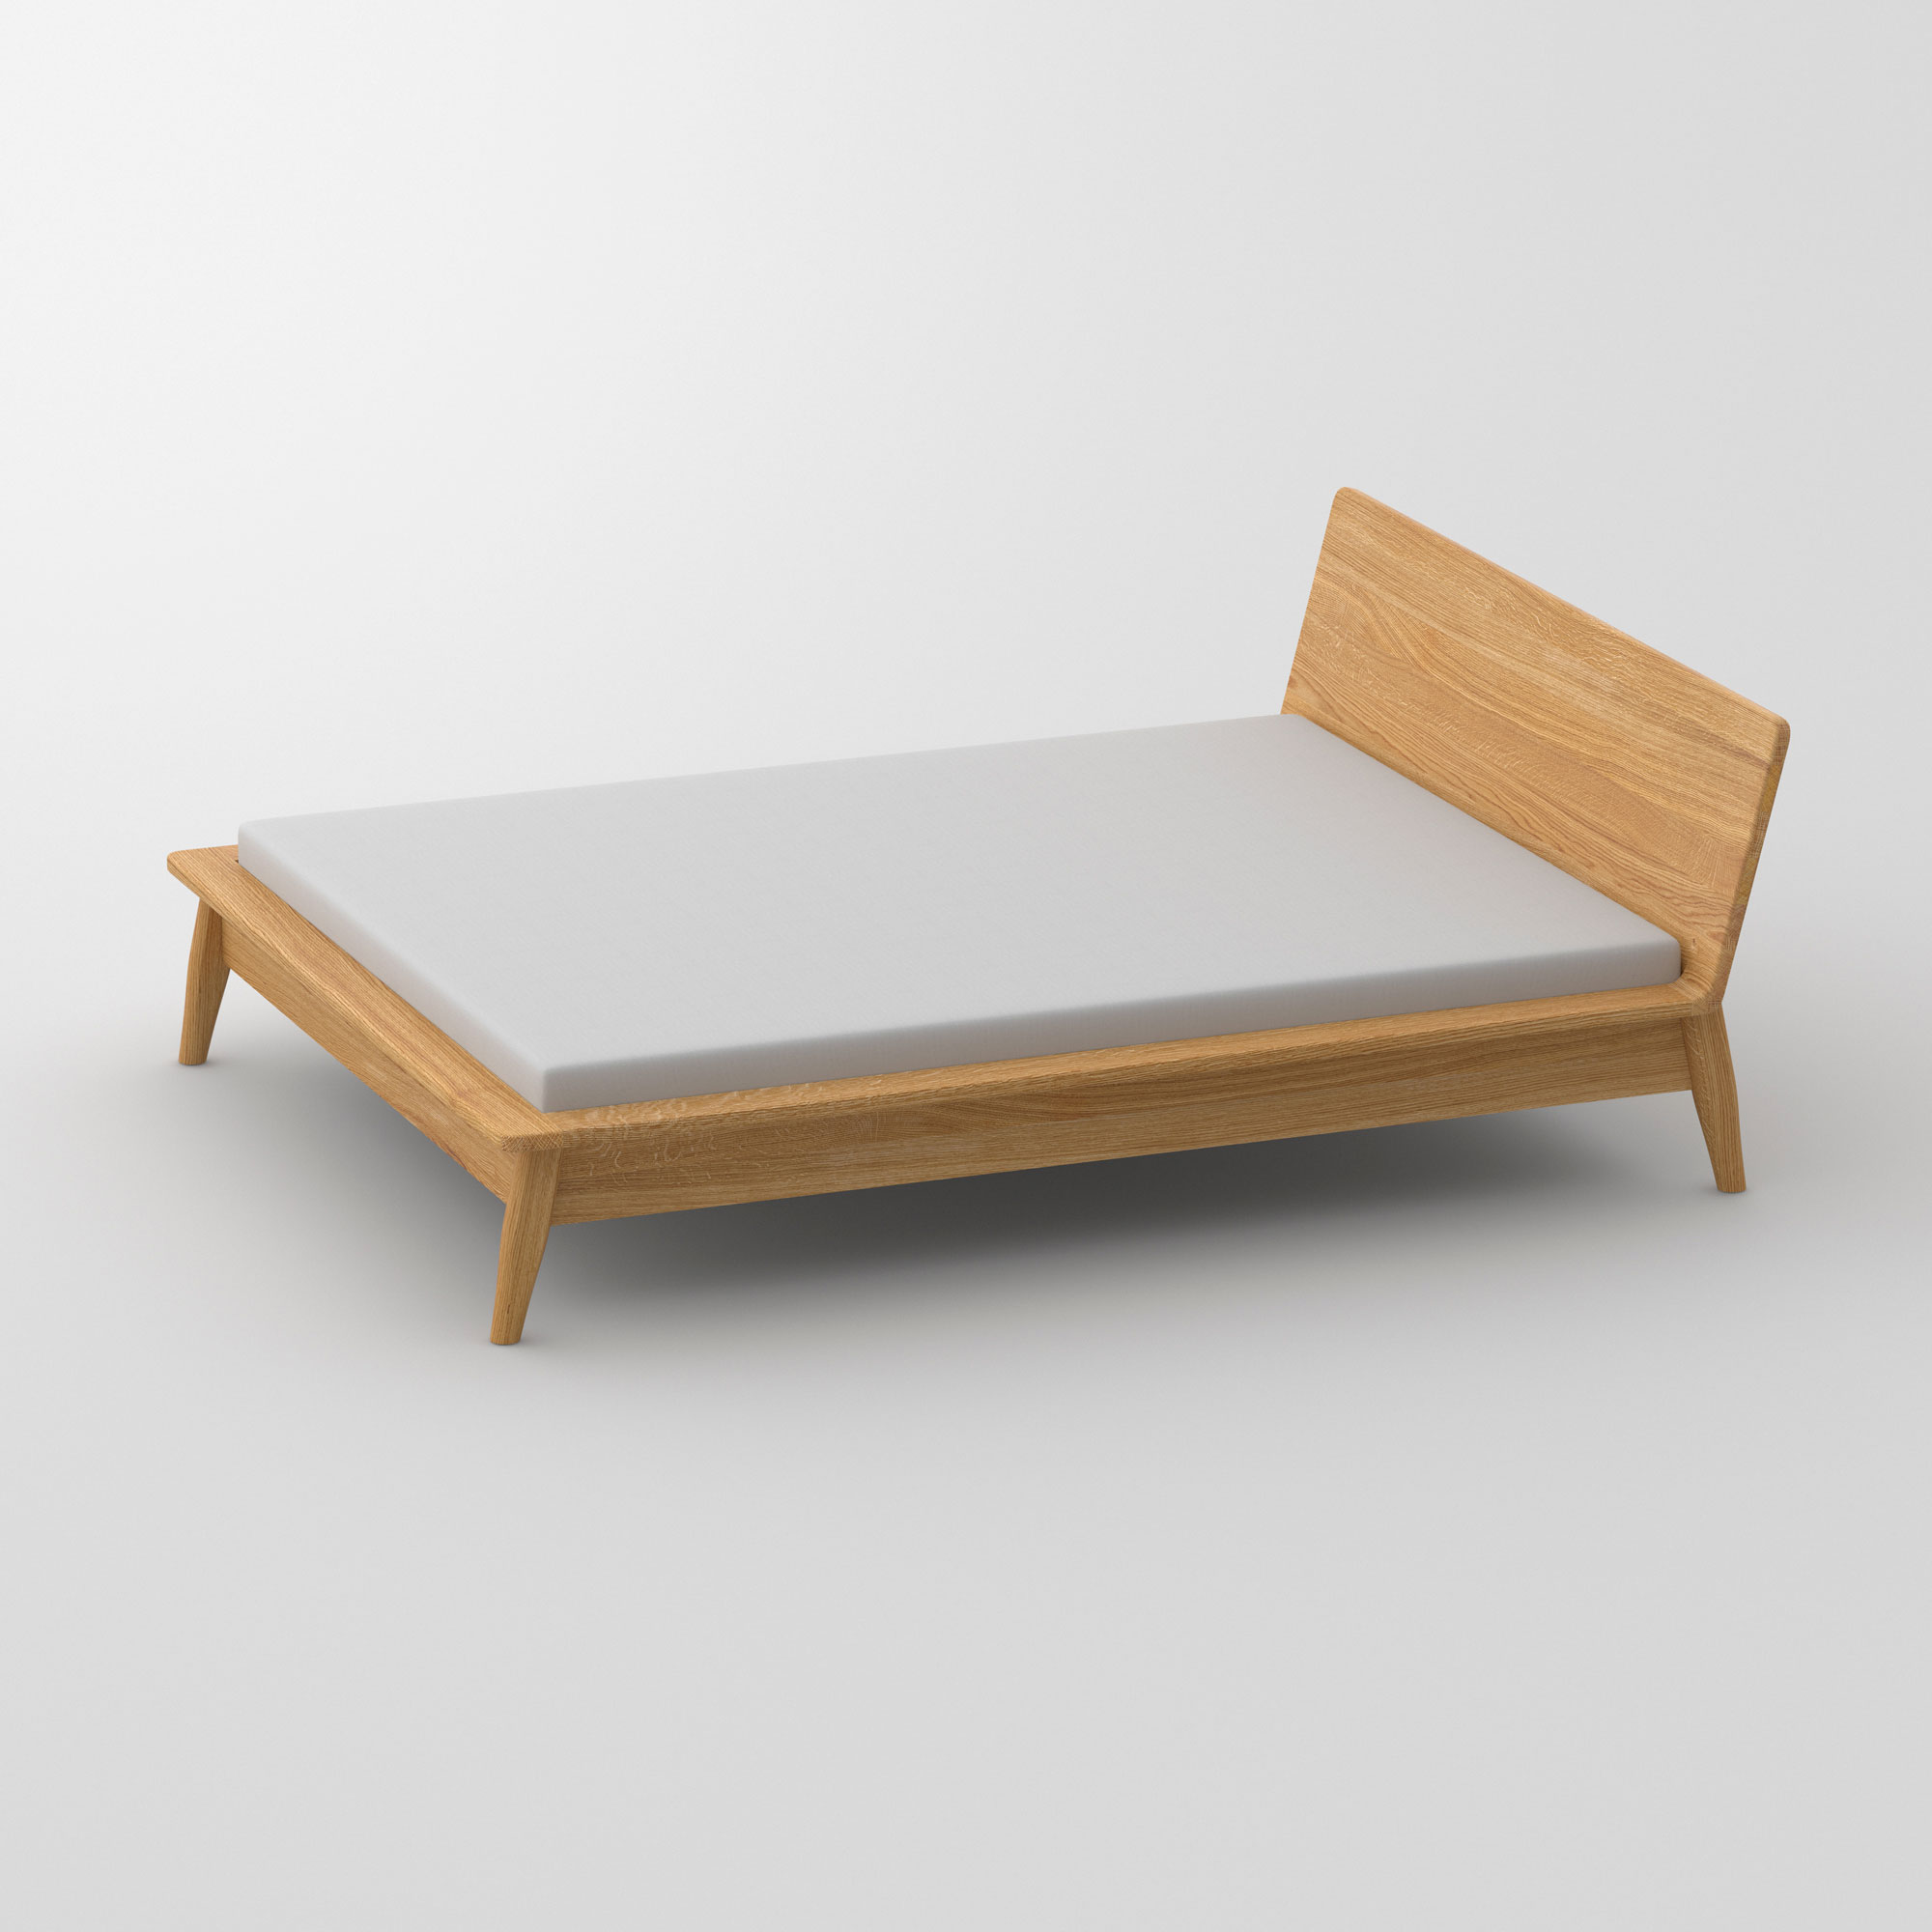 Designer Bed AETAS cam2 custom made in solid wood by vitamin design